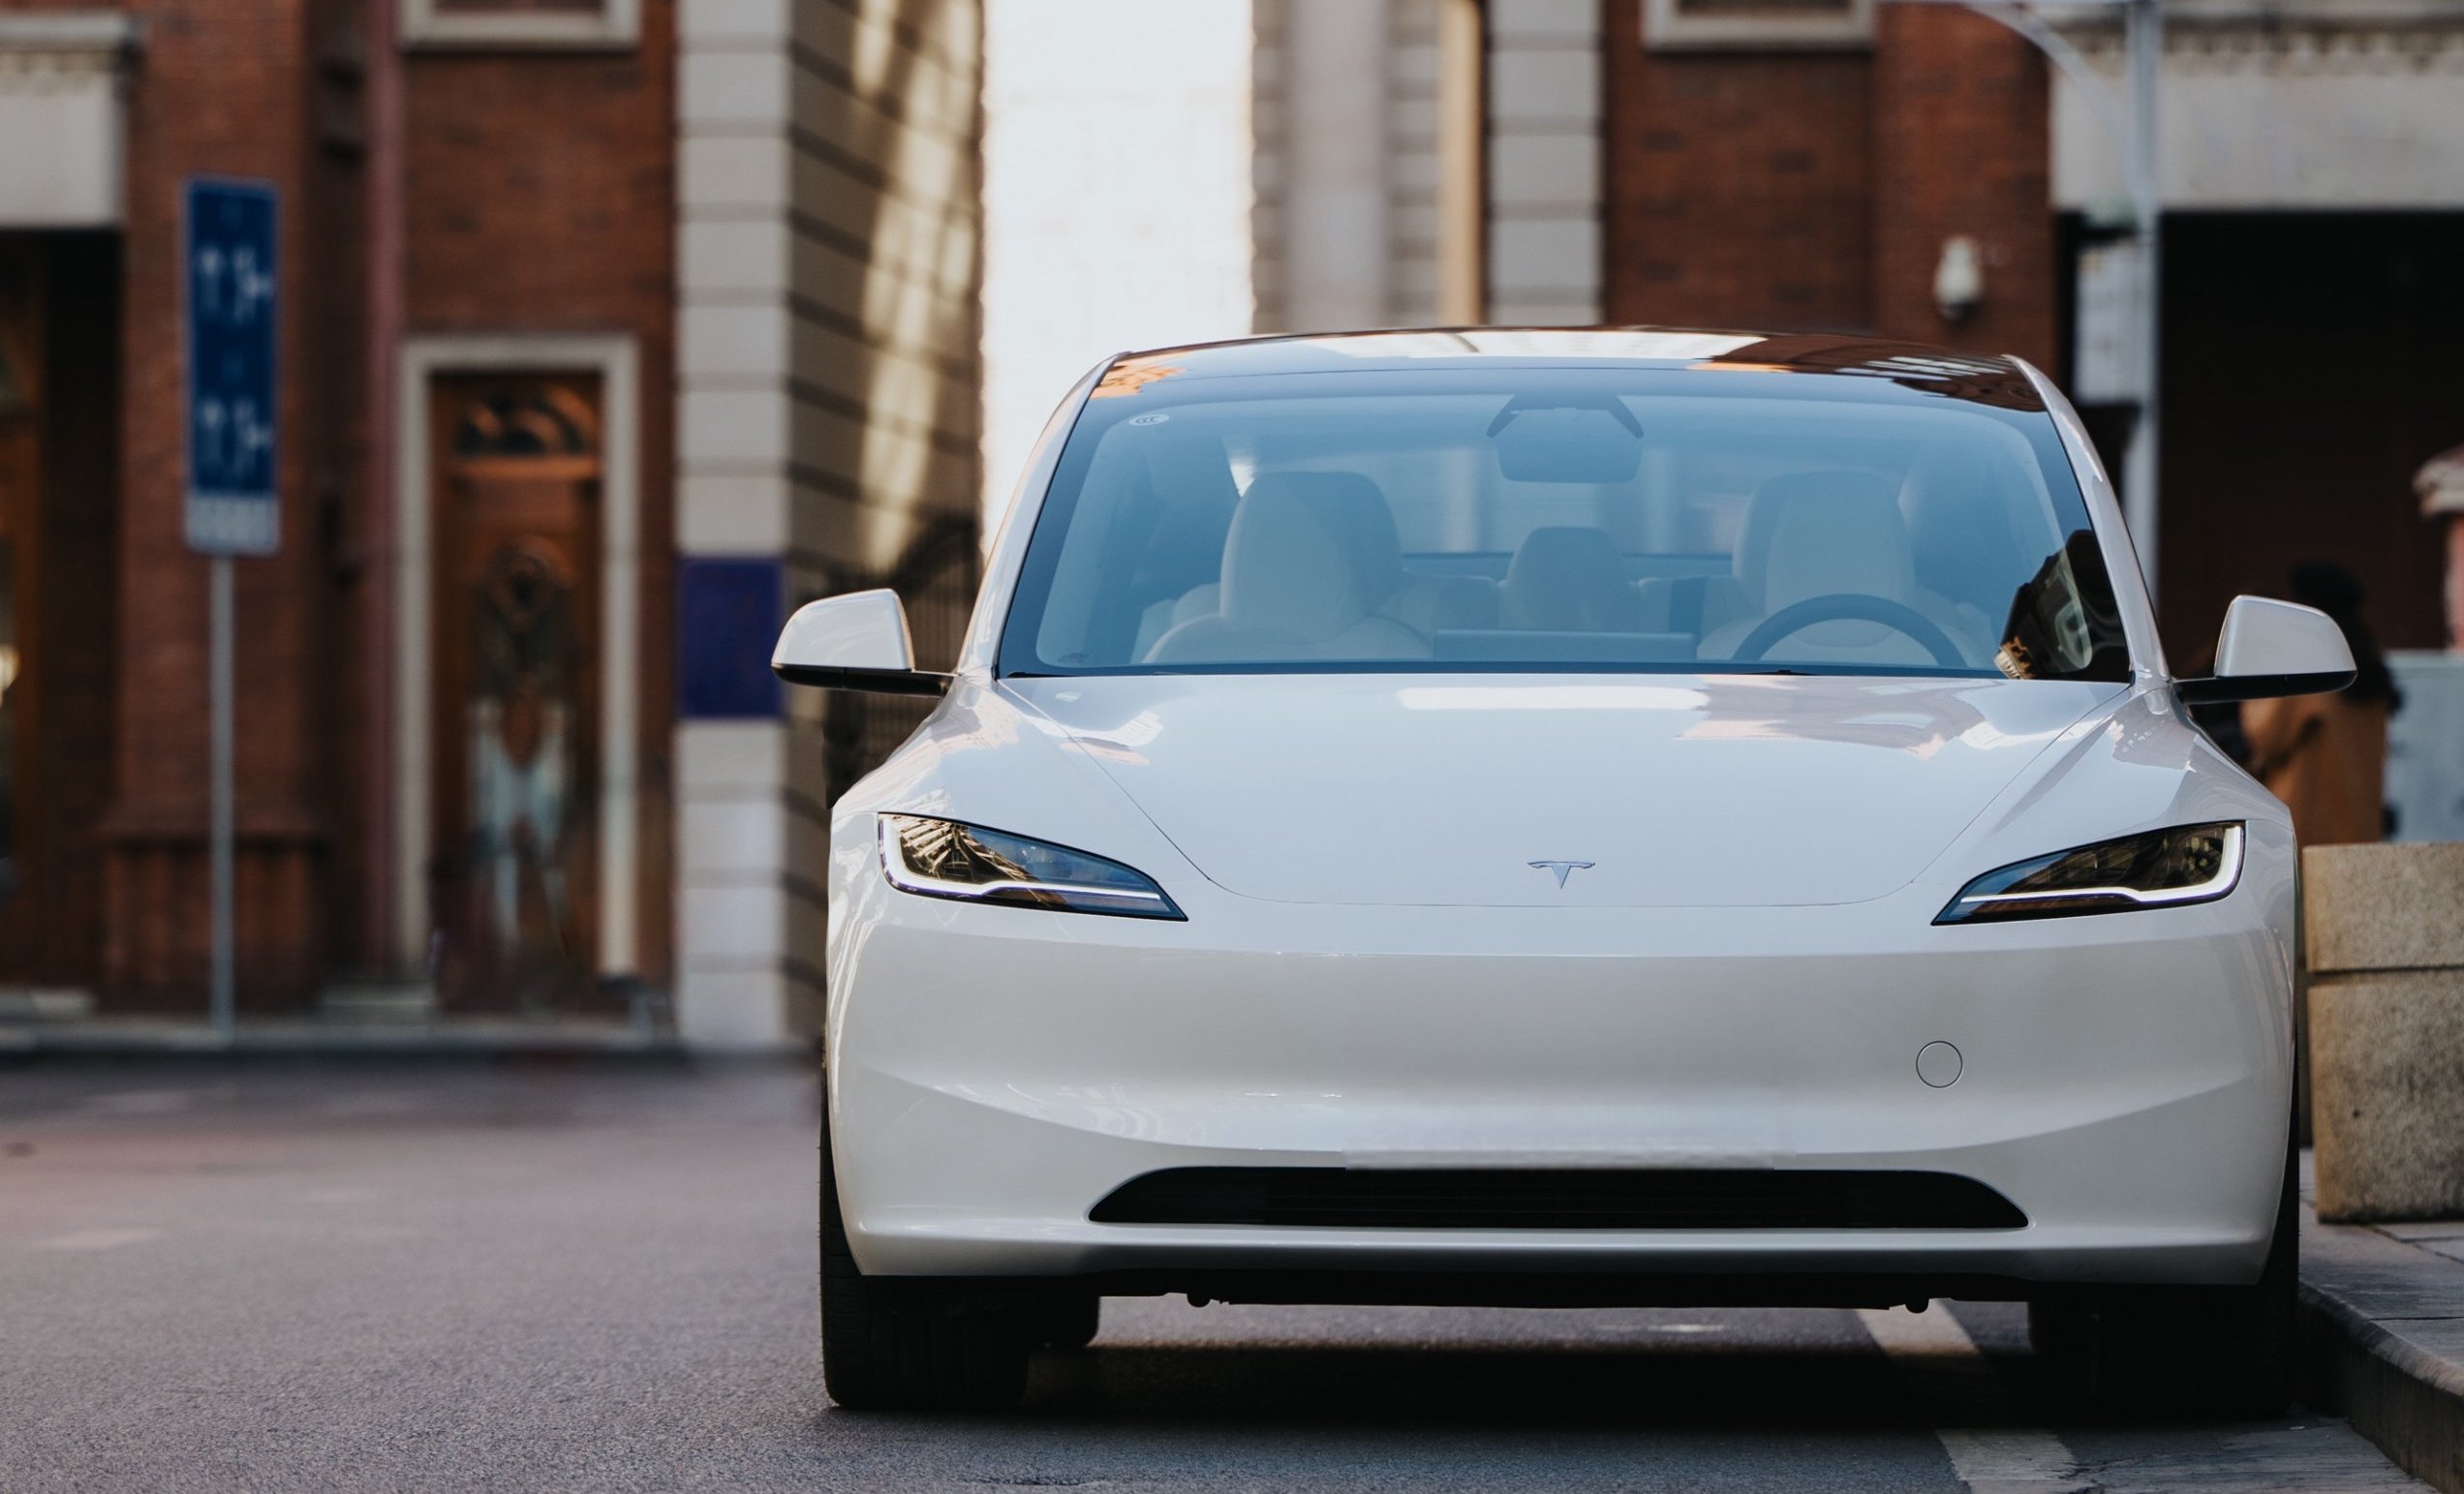 Tesla Driving Range Complaints Head to Arbitration